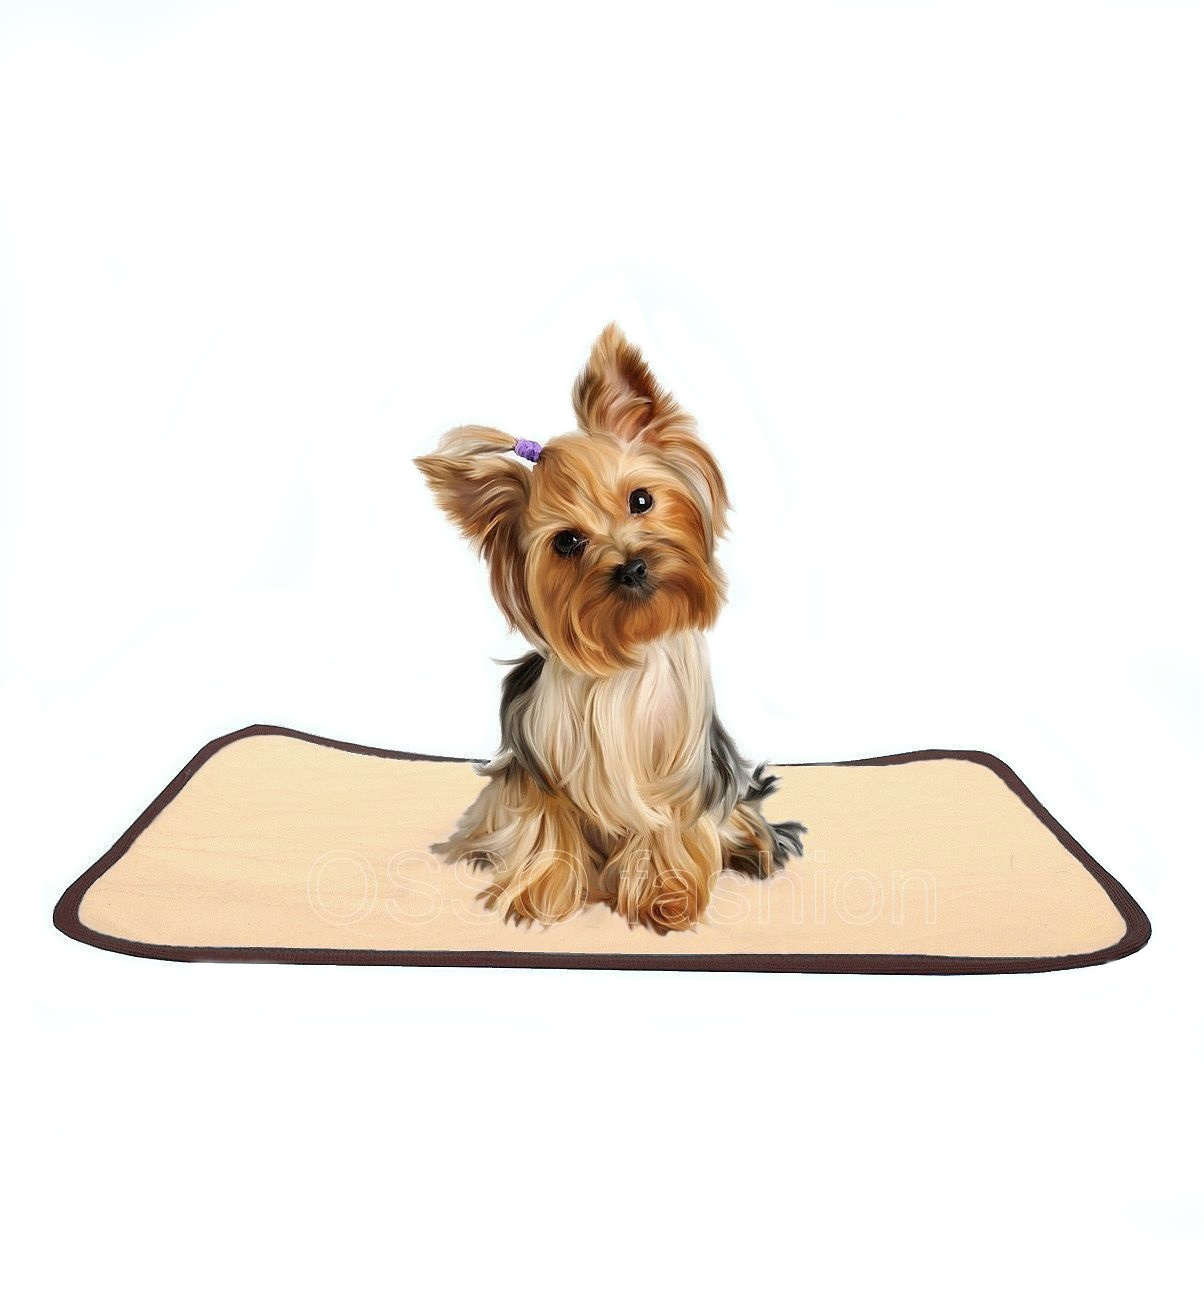 OSSO OSSO пеленка для собак многоразовая впитывающая (коричневая) (70*90 см) osso osso пеленка для собак многоразовая впитывающая коричневая 70 90 см